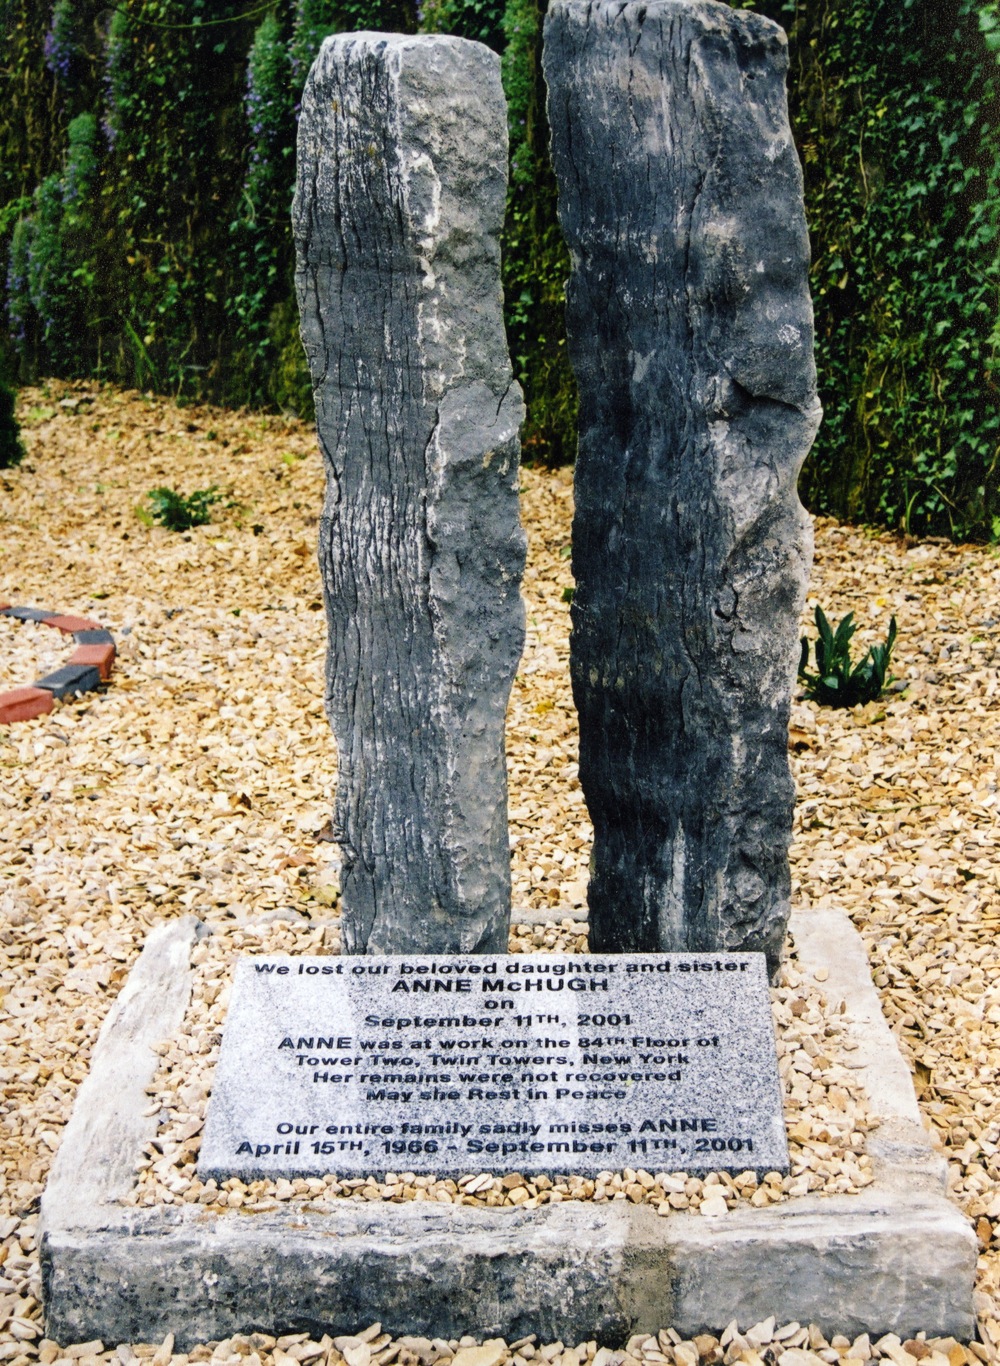 Memorial to Anne McHugh in her hometown of Tuam, Ireland